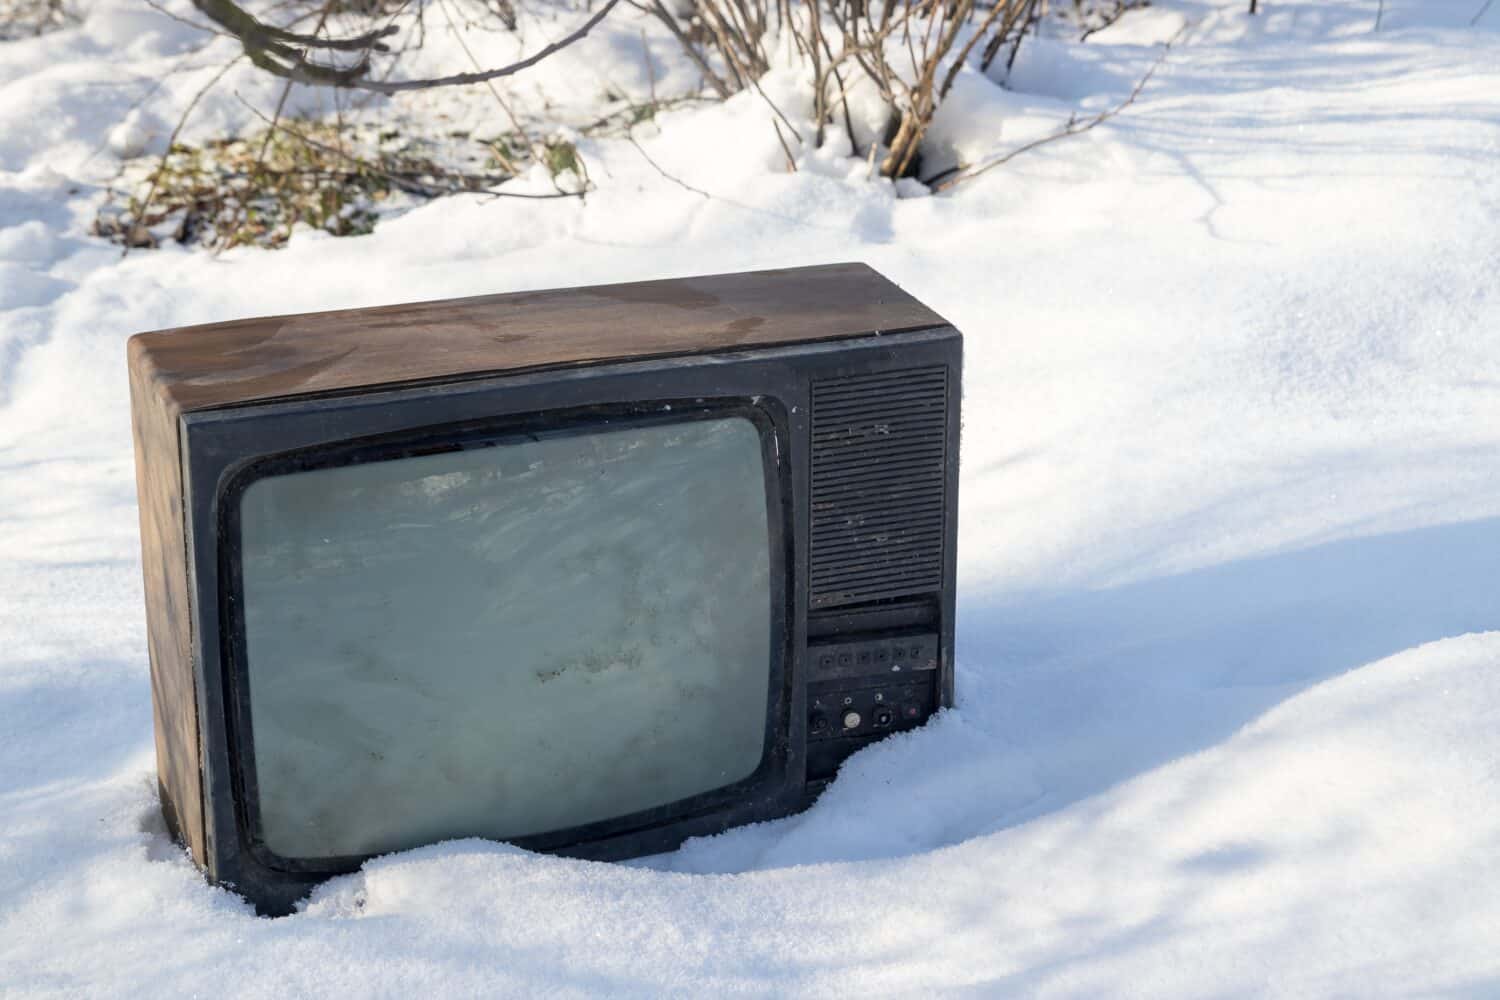 Vintage TV set sitting in the snow